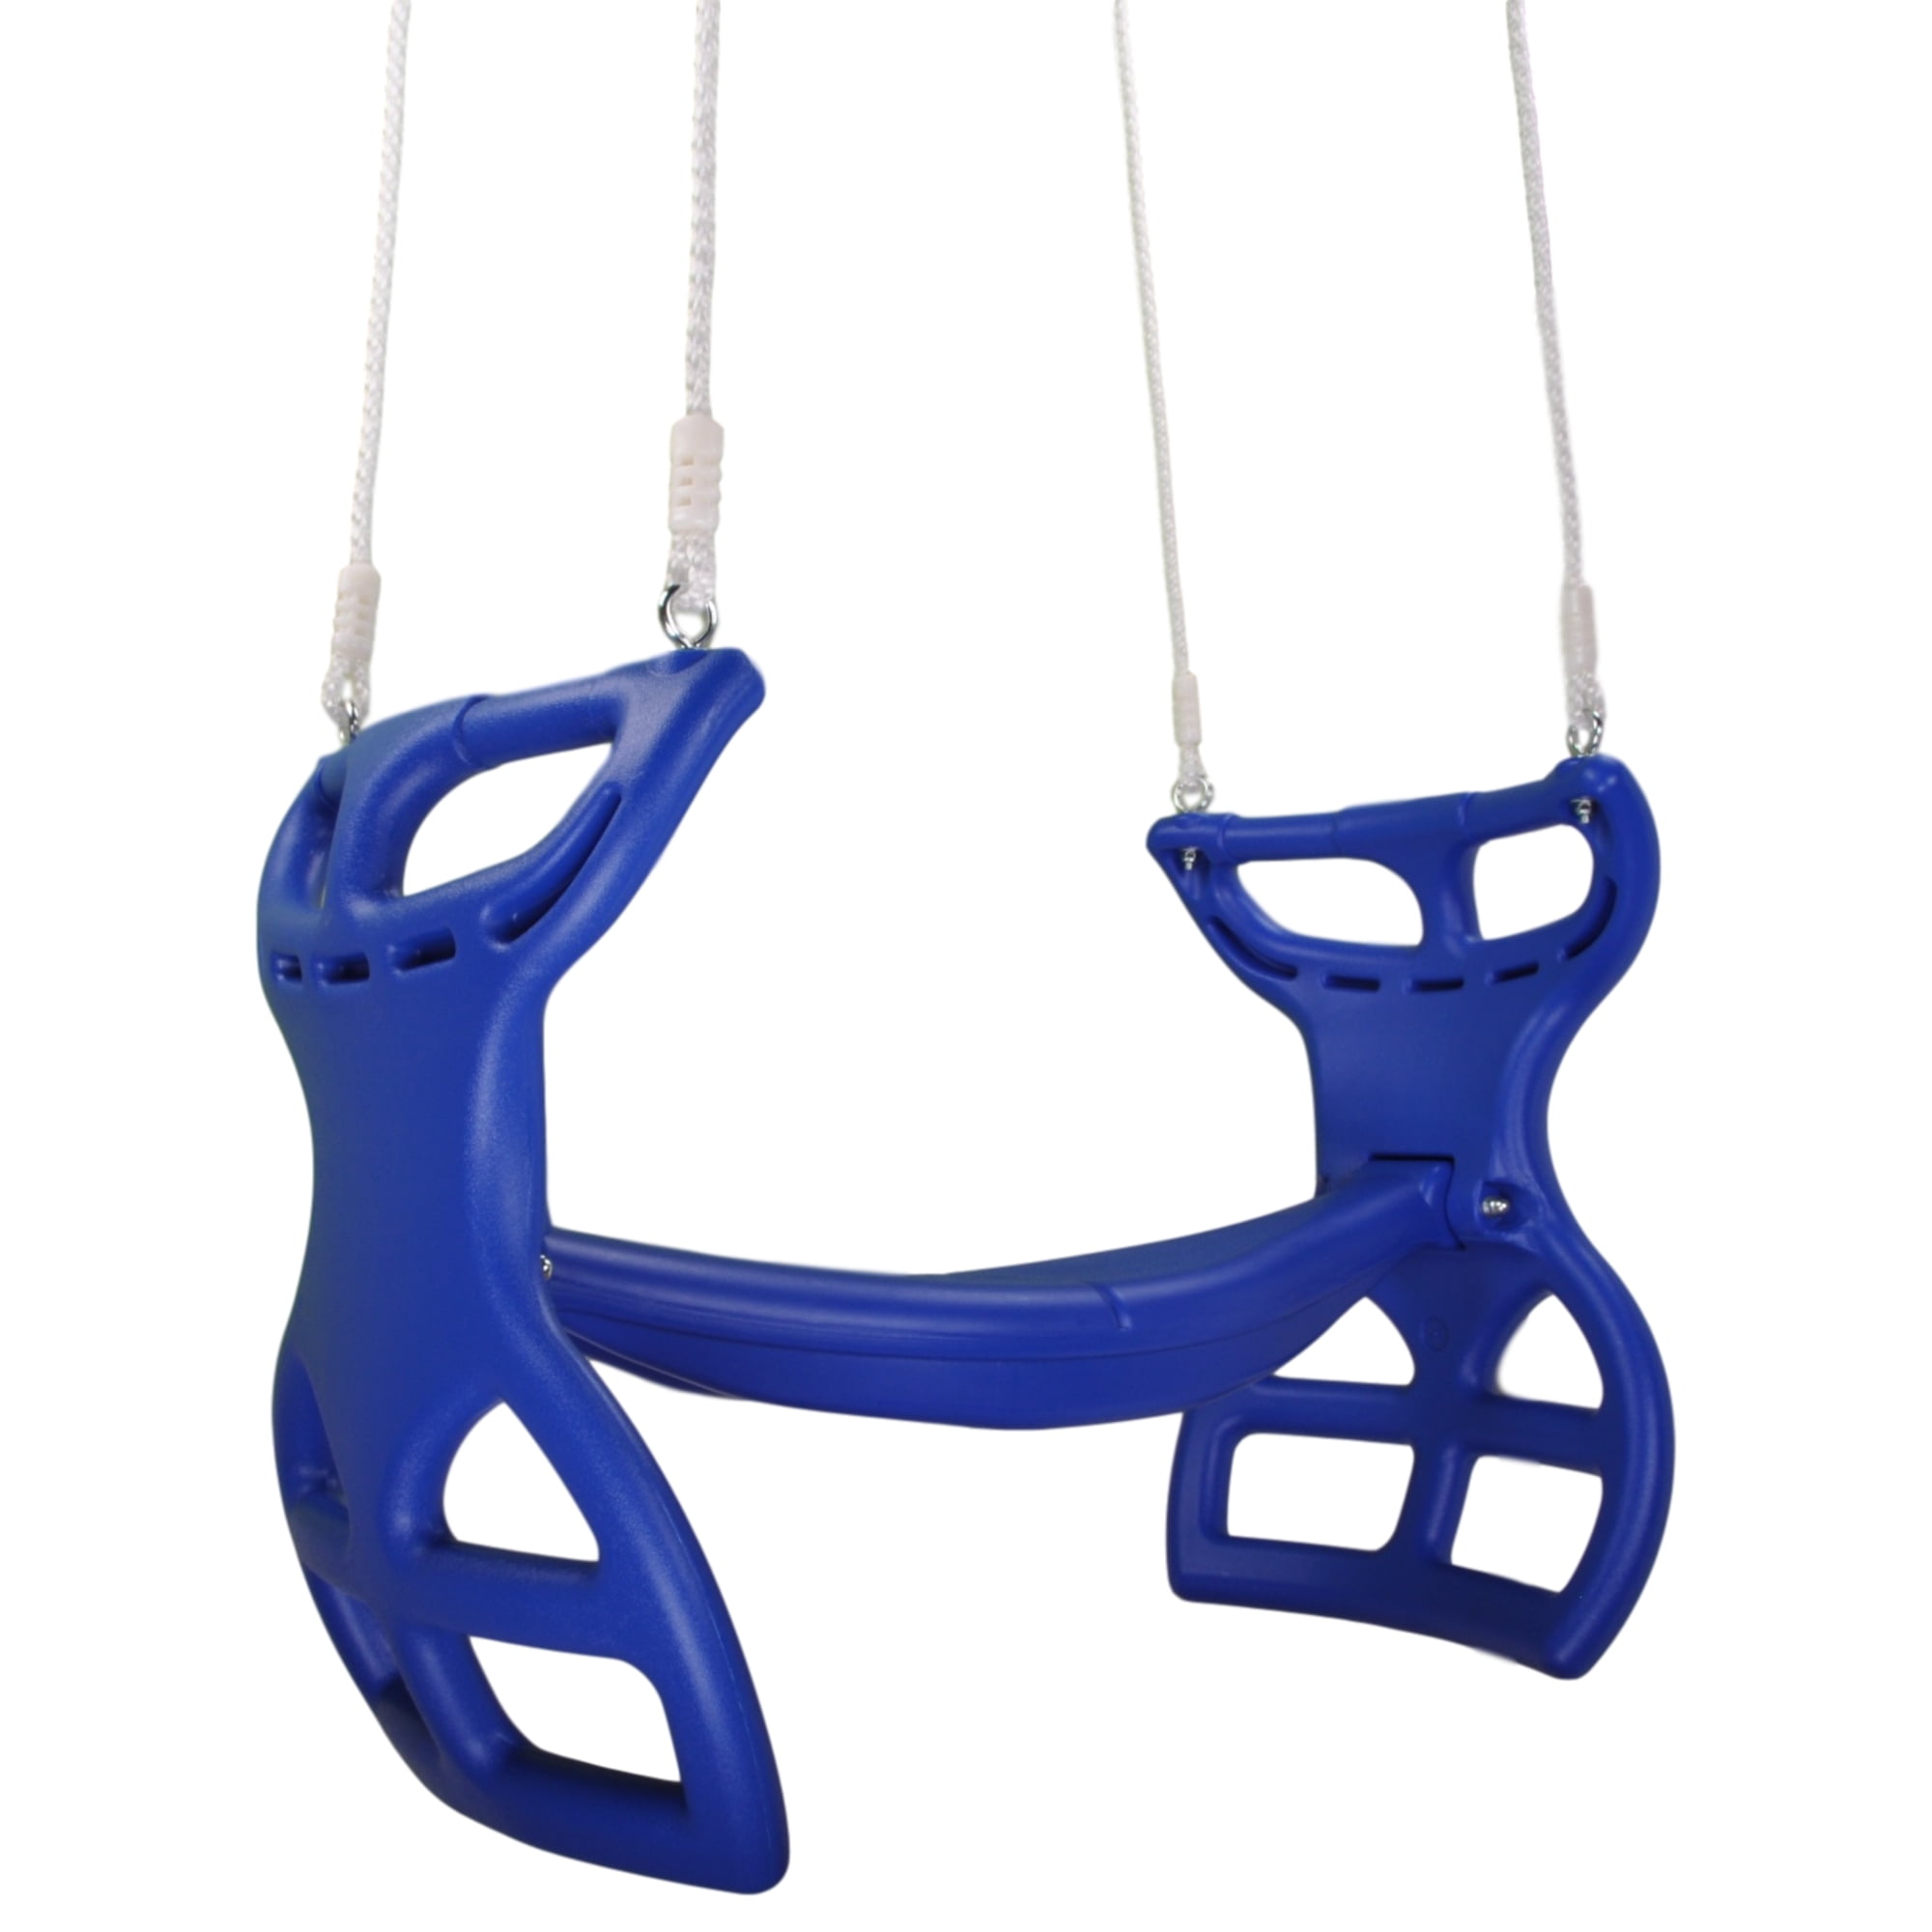 SWING SET STUFF CYCLONE SEAT WITH ROPE BLUE playground backyard accessories 0120 